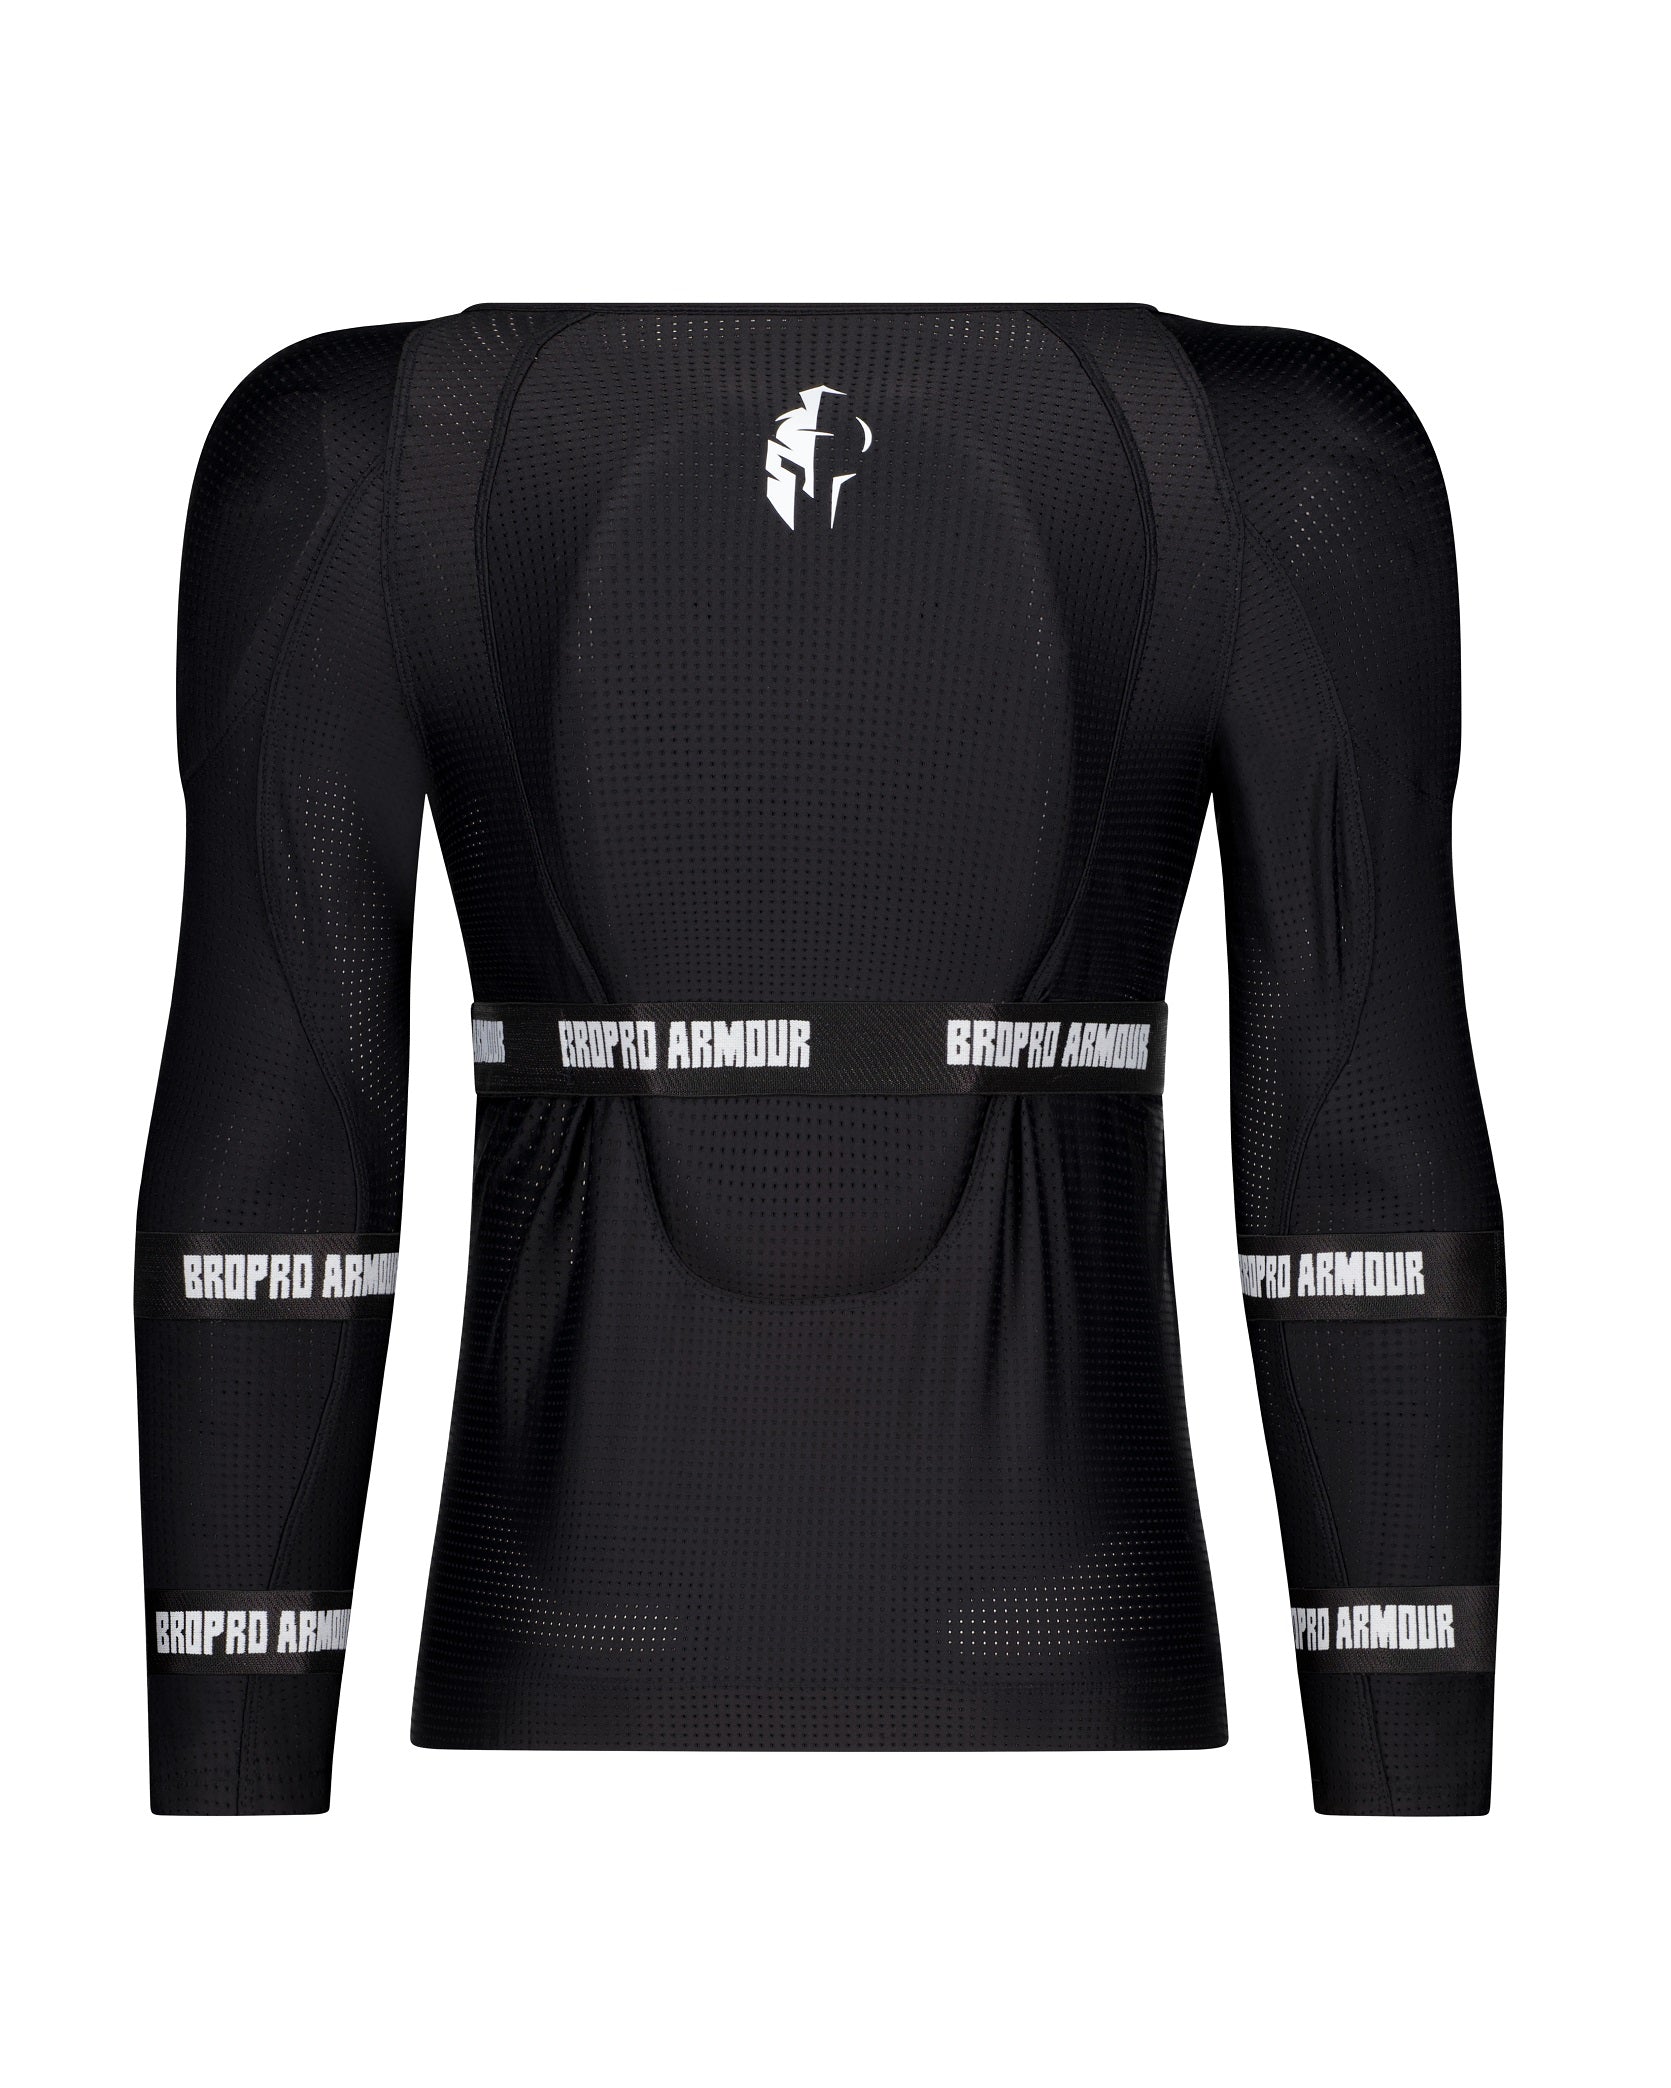 Fempro Armour - Bropro Undergarment Armour Jersey 1.1 - Summer Fabric